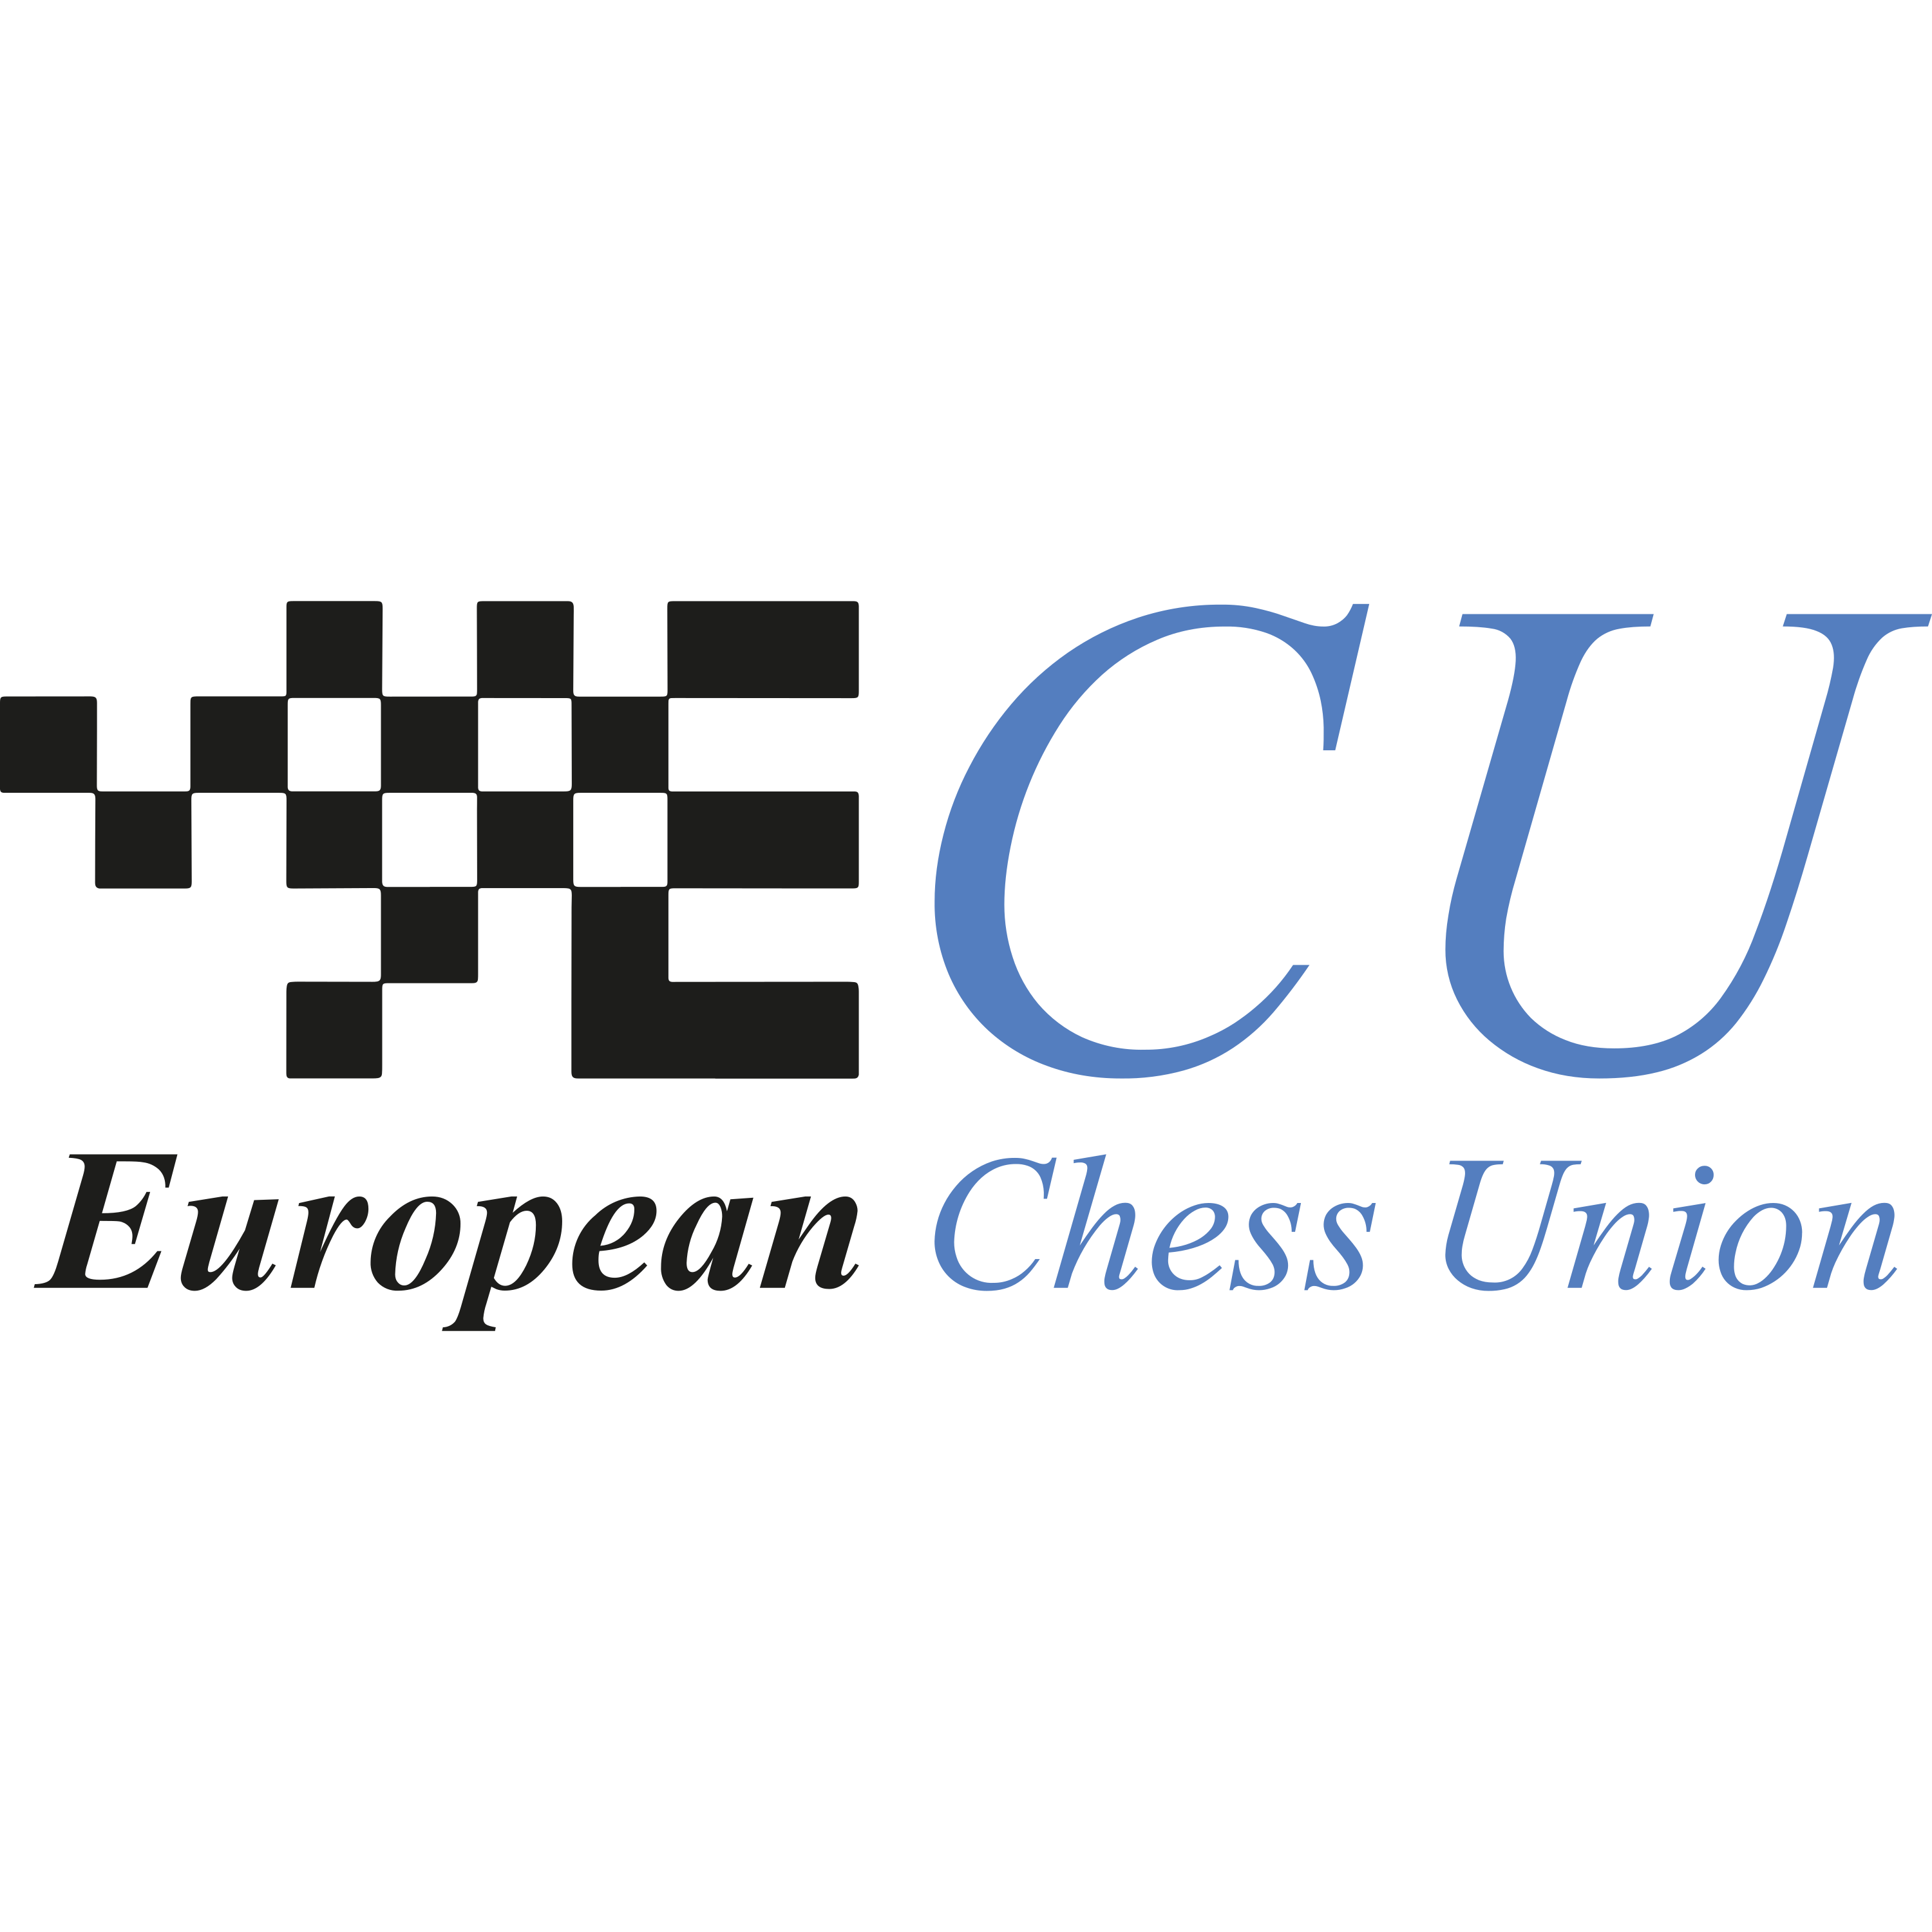 European Chess Union Logo  Transparent Image